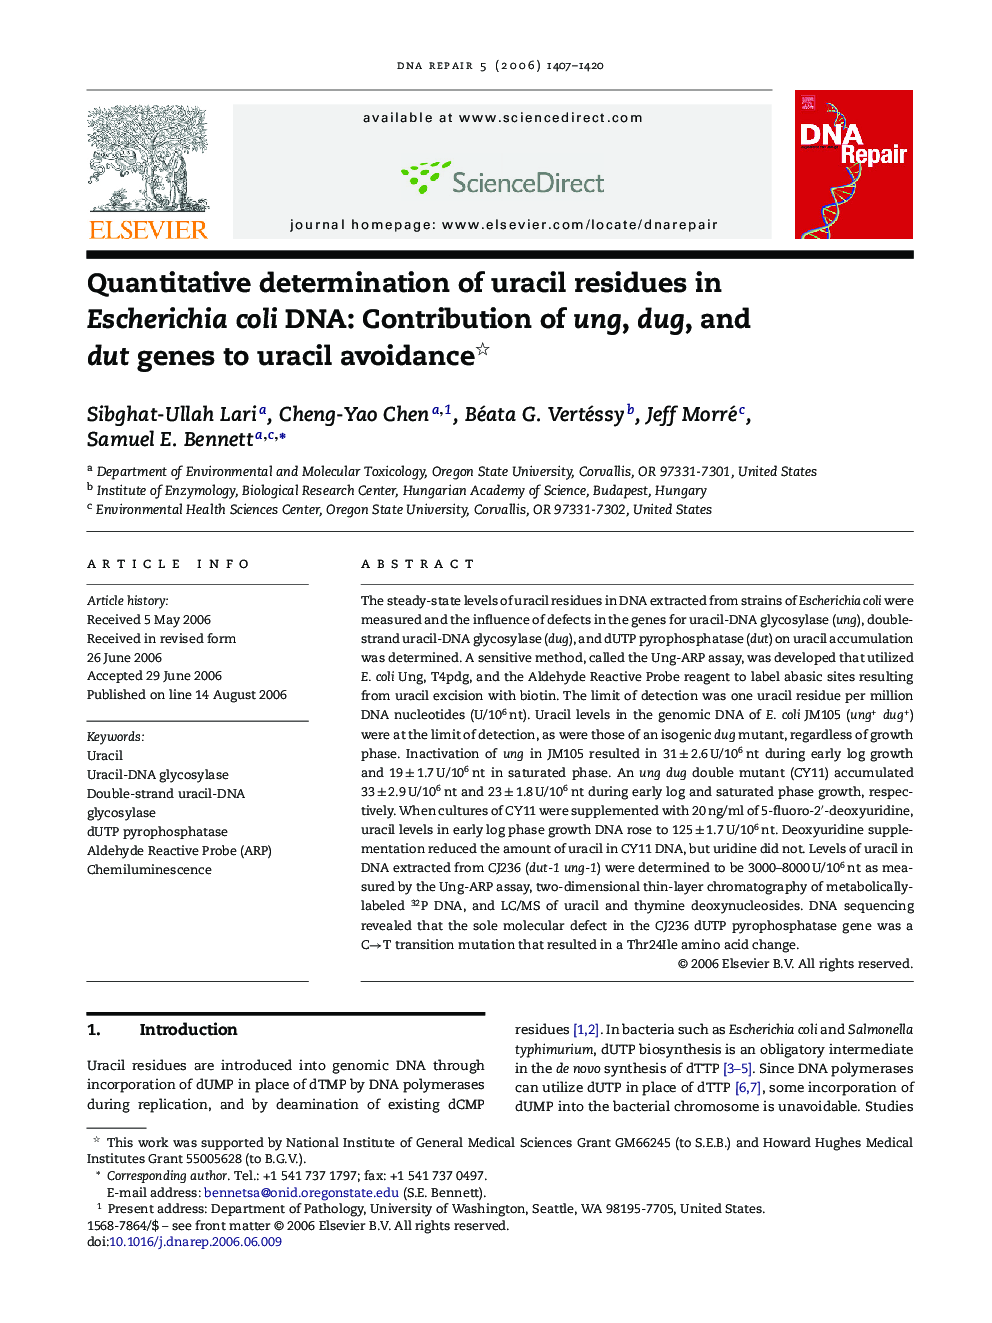 Quantitative determination of uracil residues in Escherichia coli DNA: Contribution of ung, dug, and dut genes to uracil avoidance 